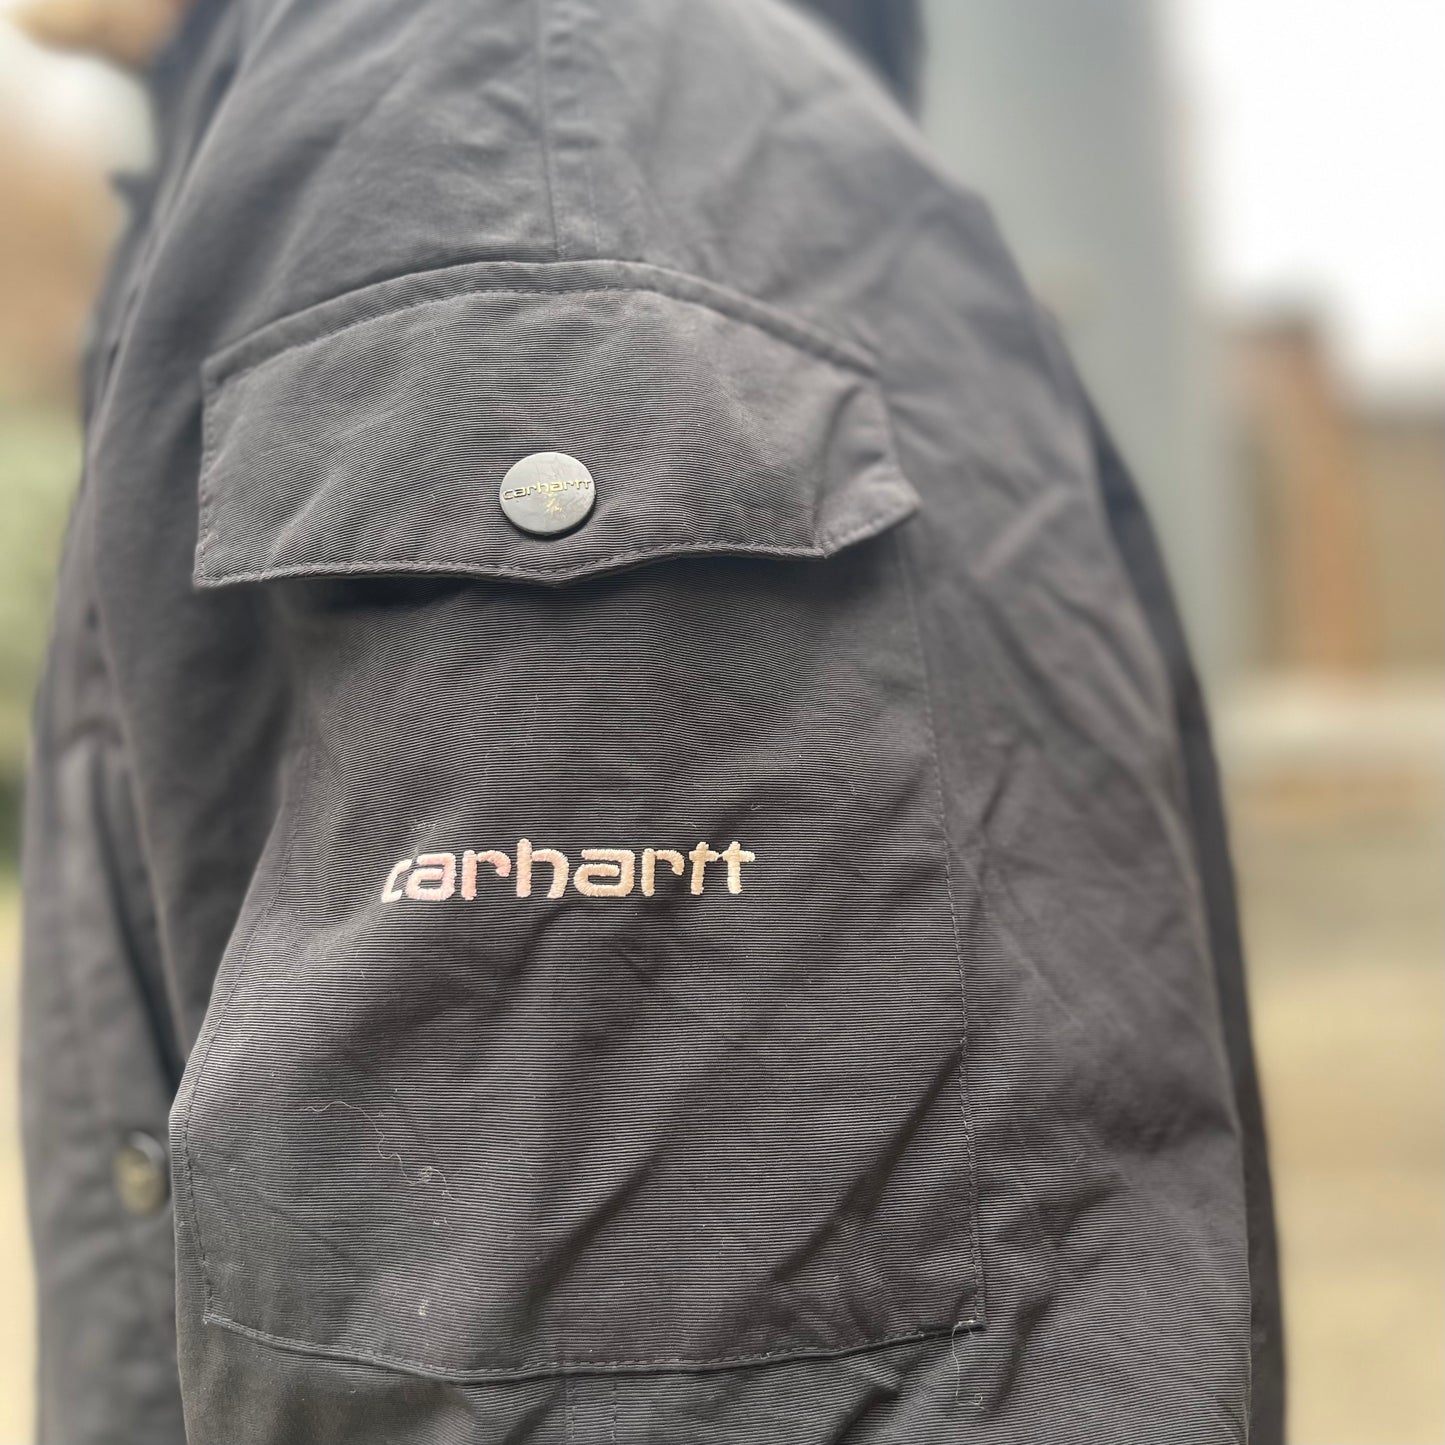 Carhartt Winter Trapper Parka Black Hooded Jacket - Large